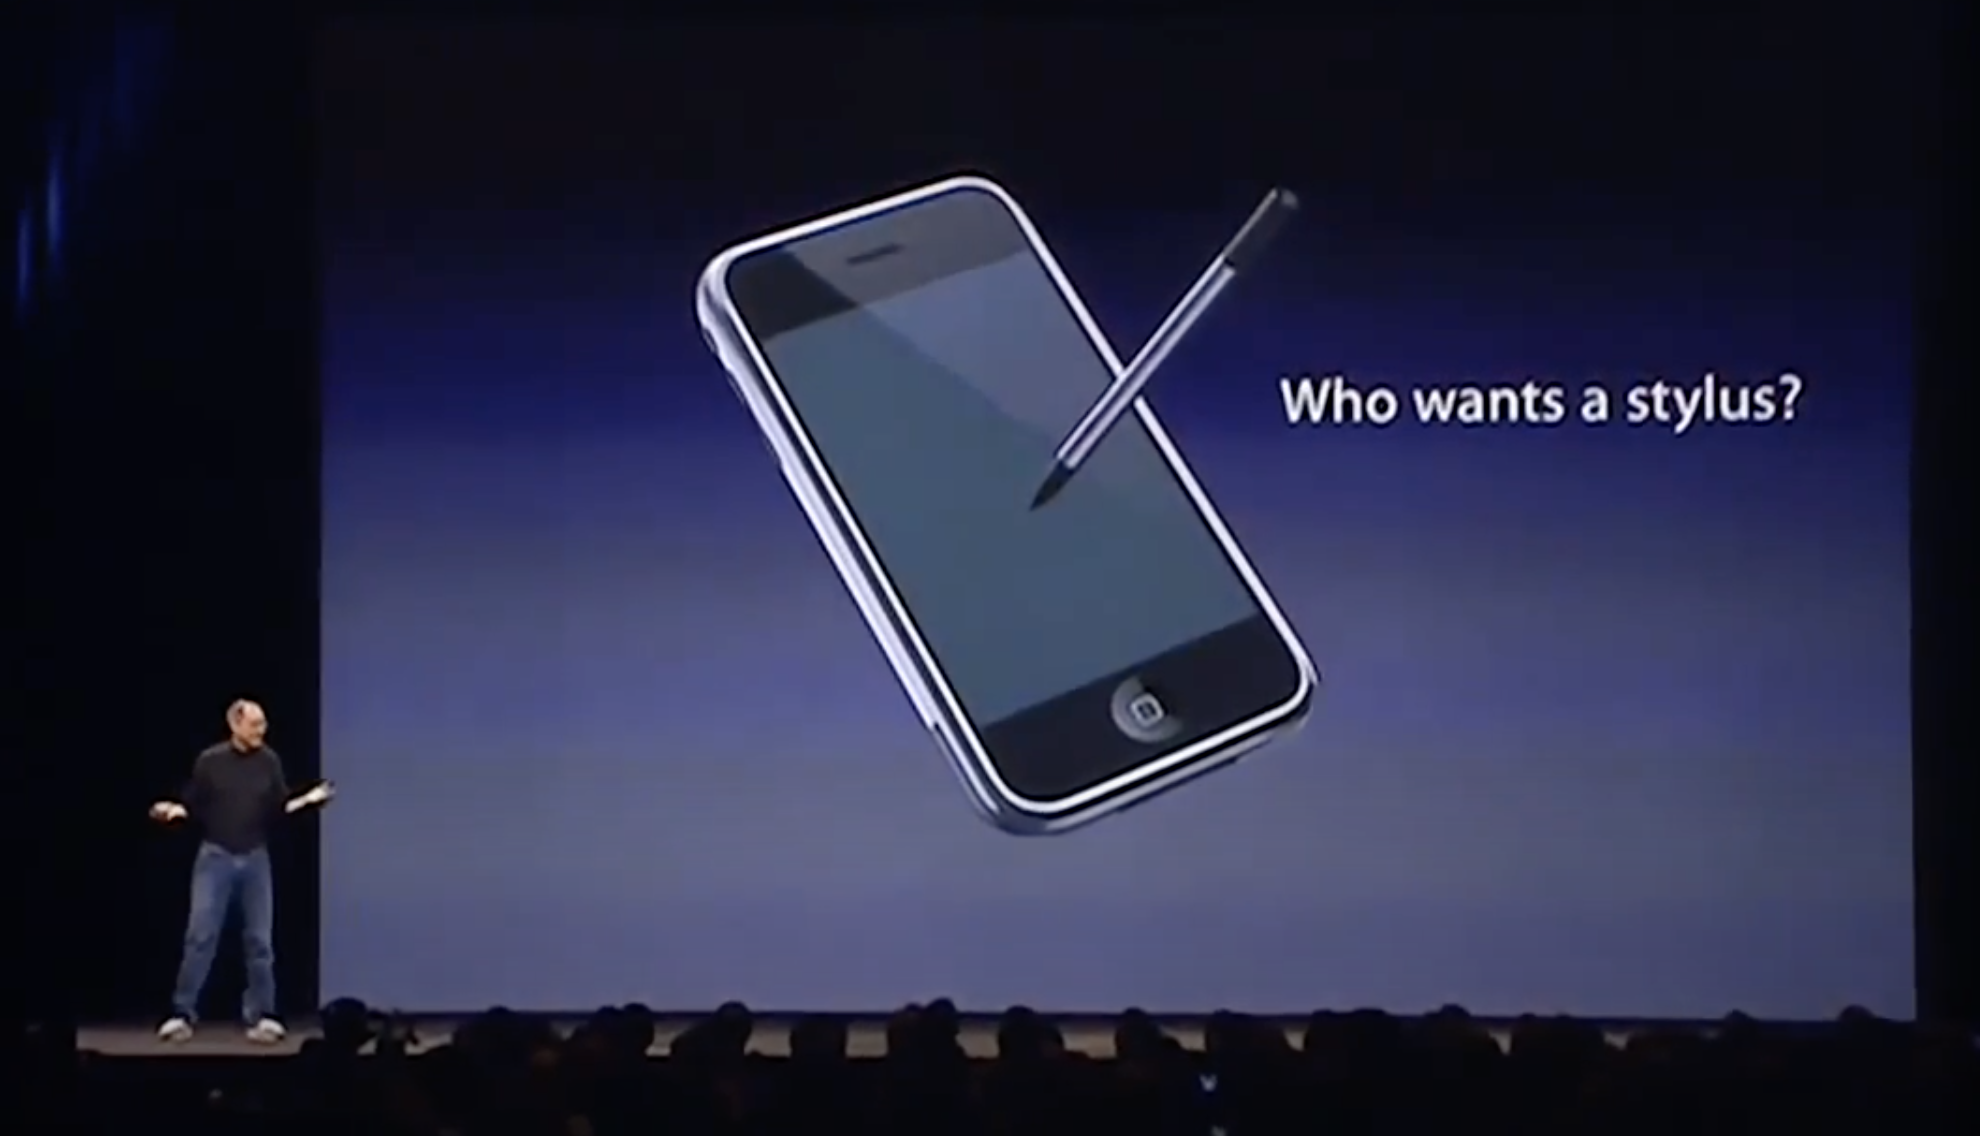 "Who wants a stylus?" と書かれたスライドとスティーブ・ジョブズの写真